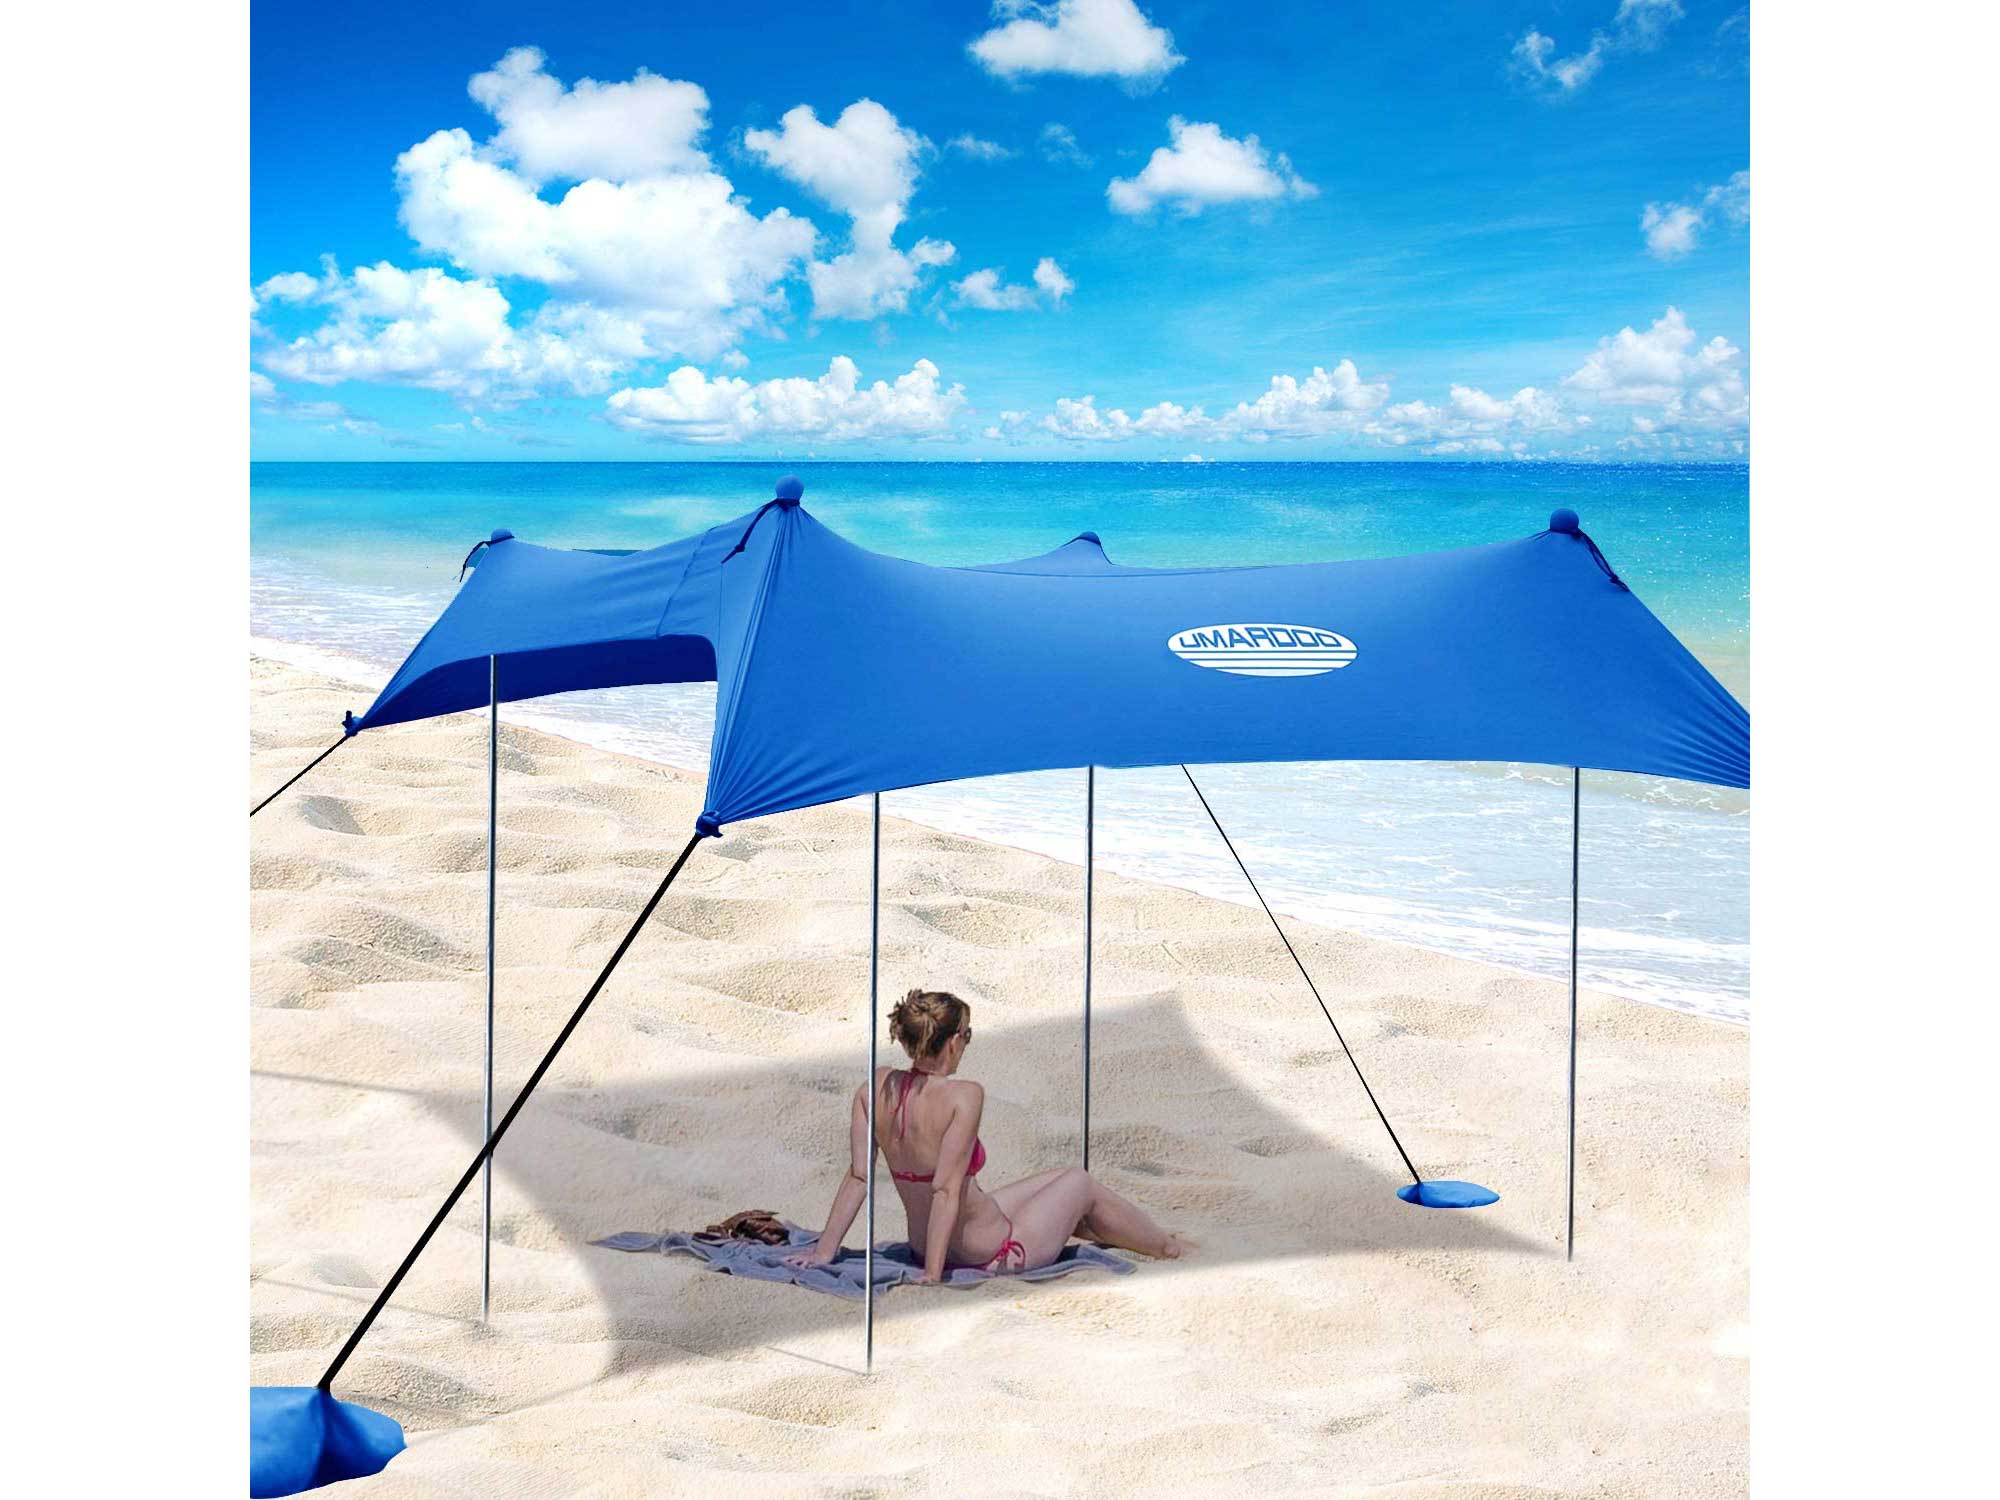 UMARDOO Family Beach Tent with 4 Aluminum Poles, Pop Up Beach Sunshade with Carrying Bag (Blue, 7X7 FT)